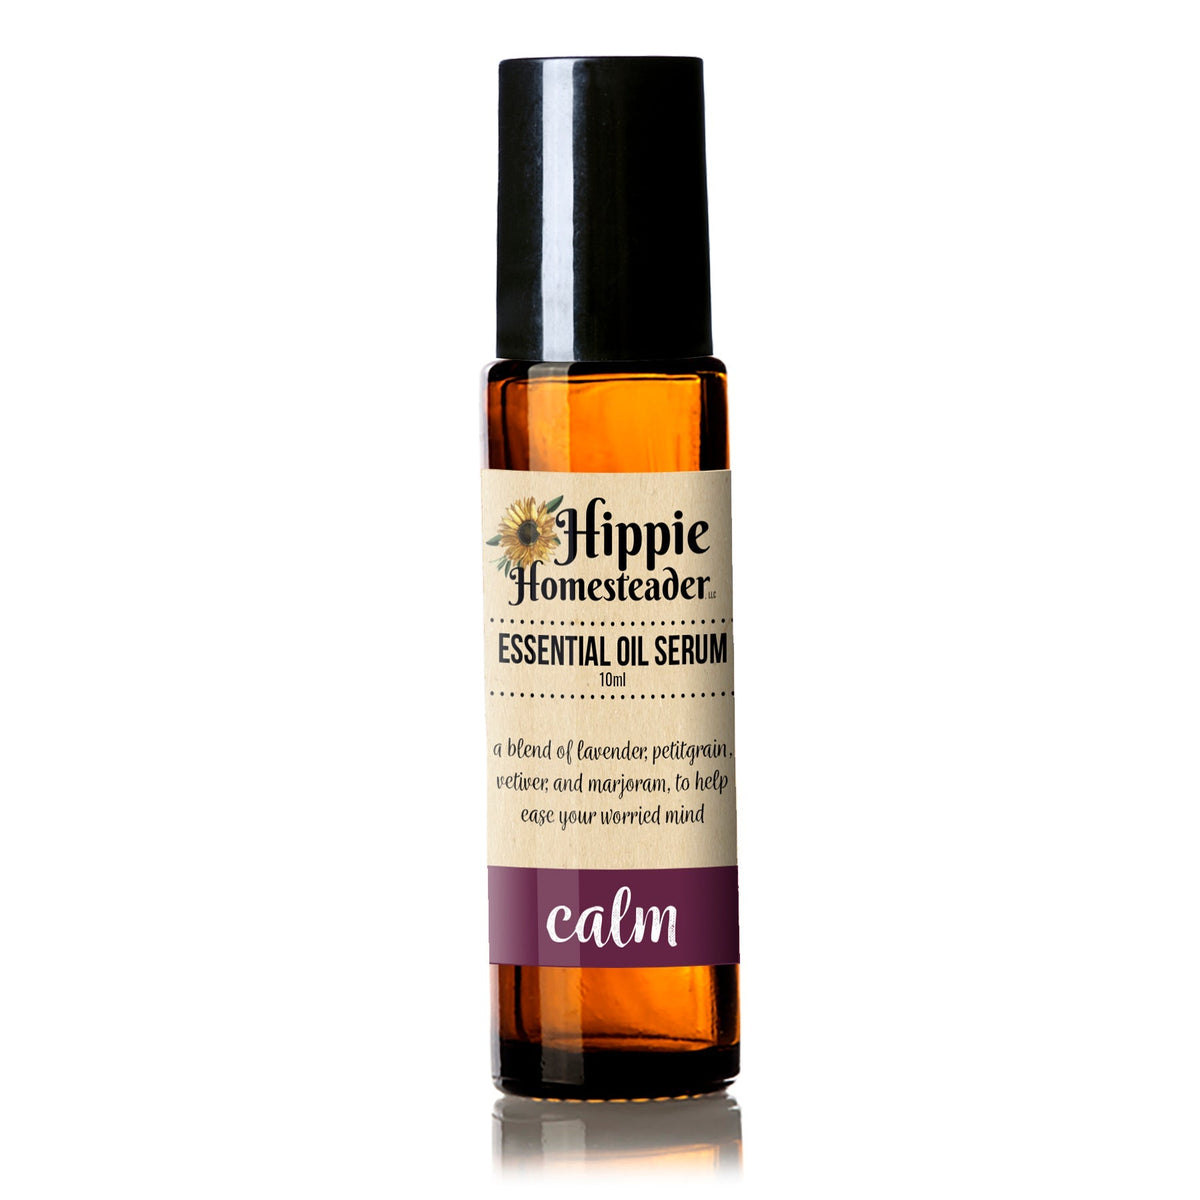 CALM Essential Oil Serum by The Hippie Homesteader, LLC